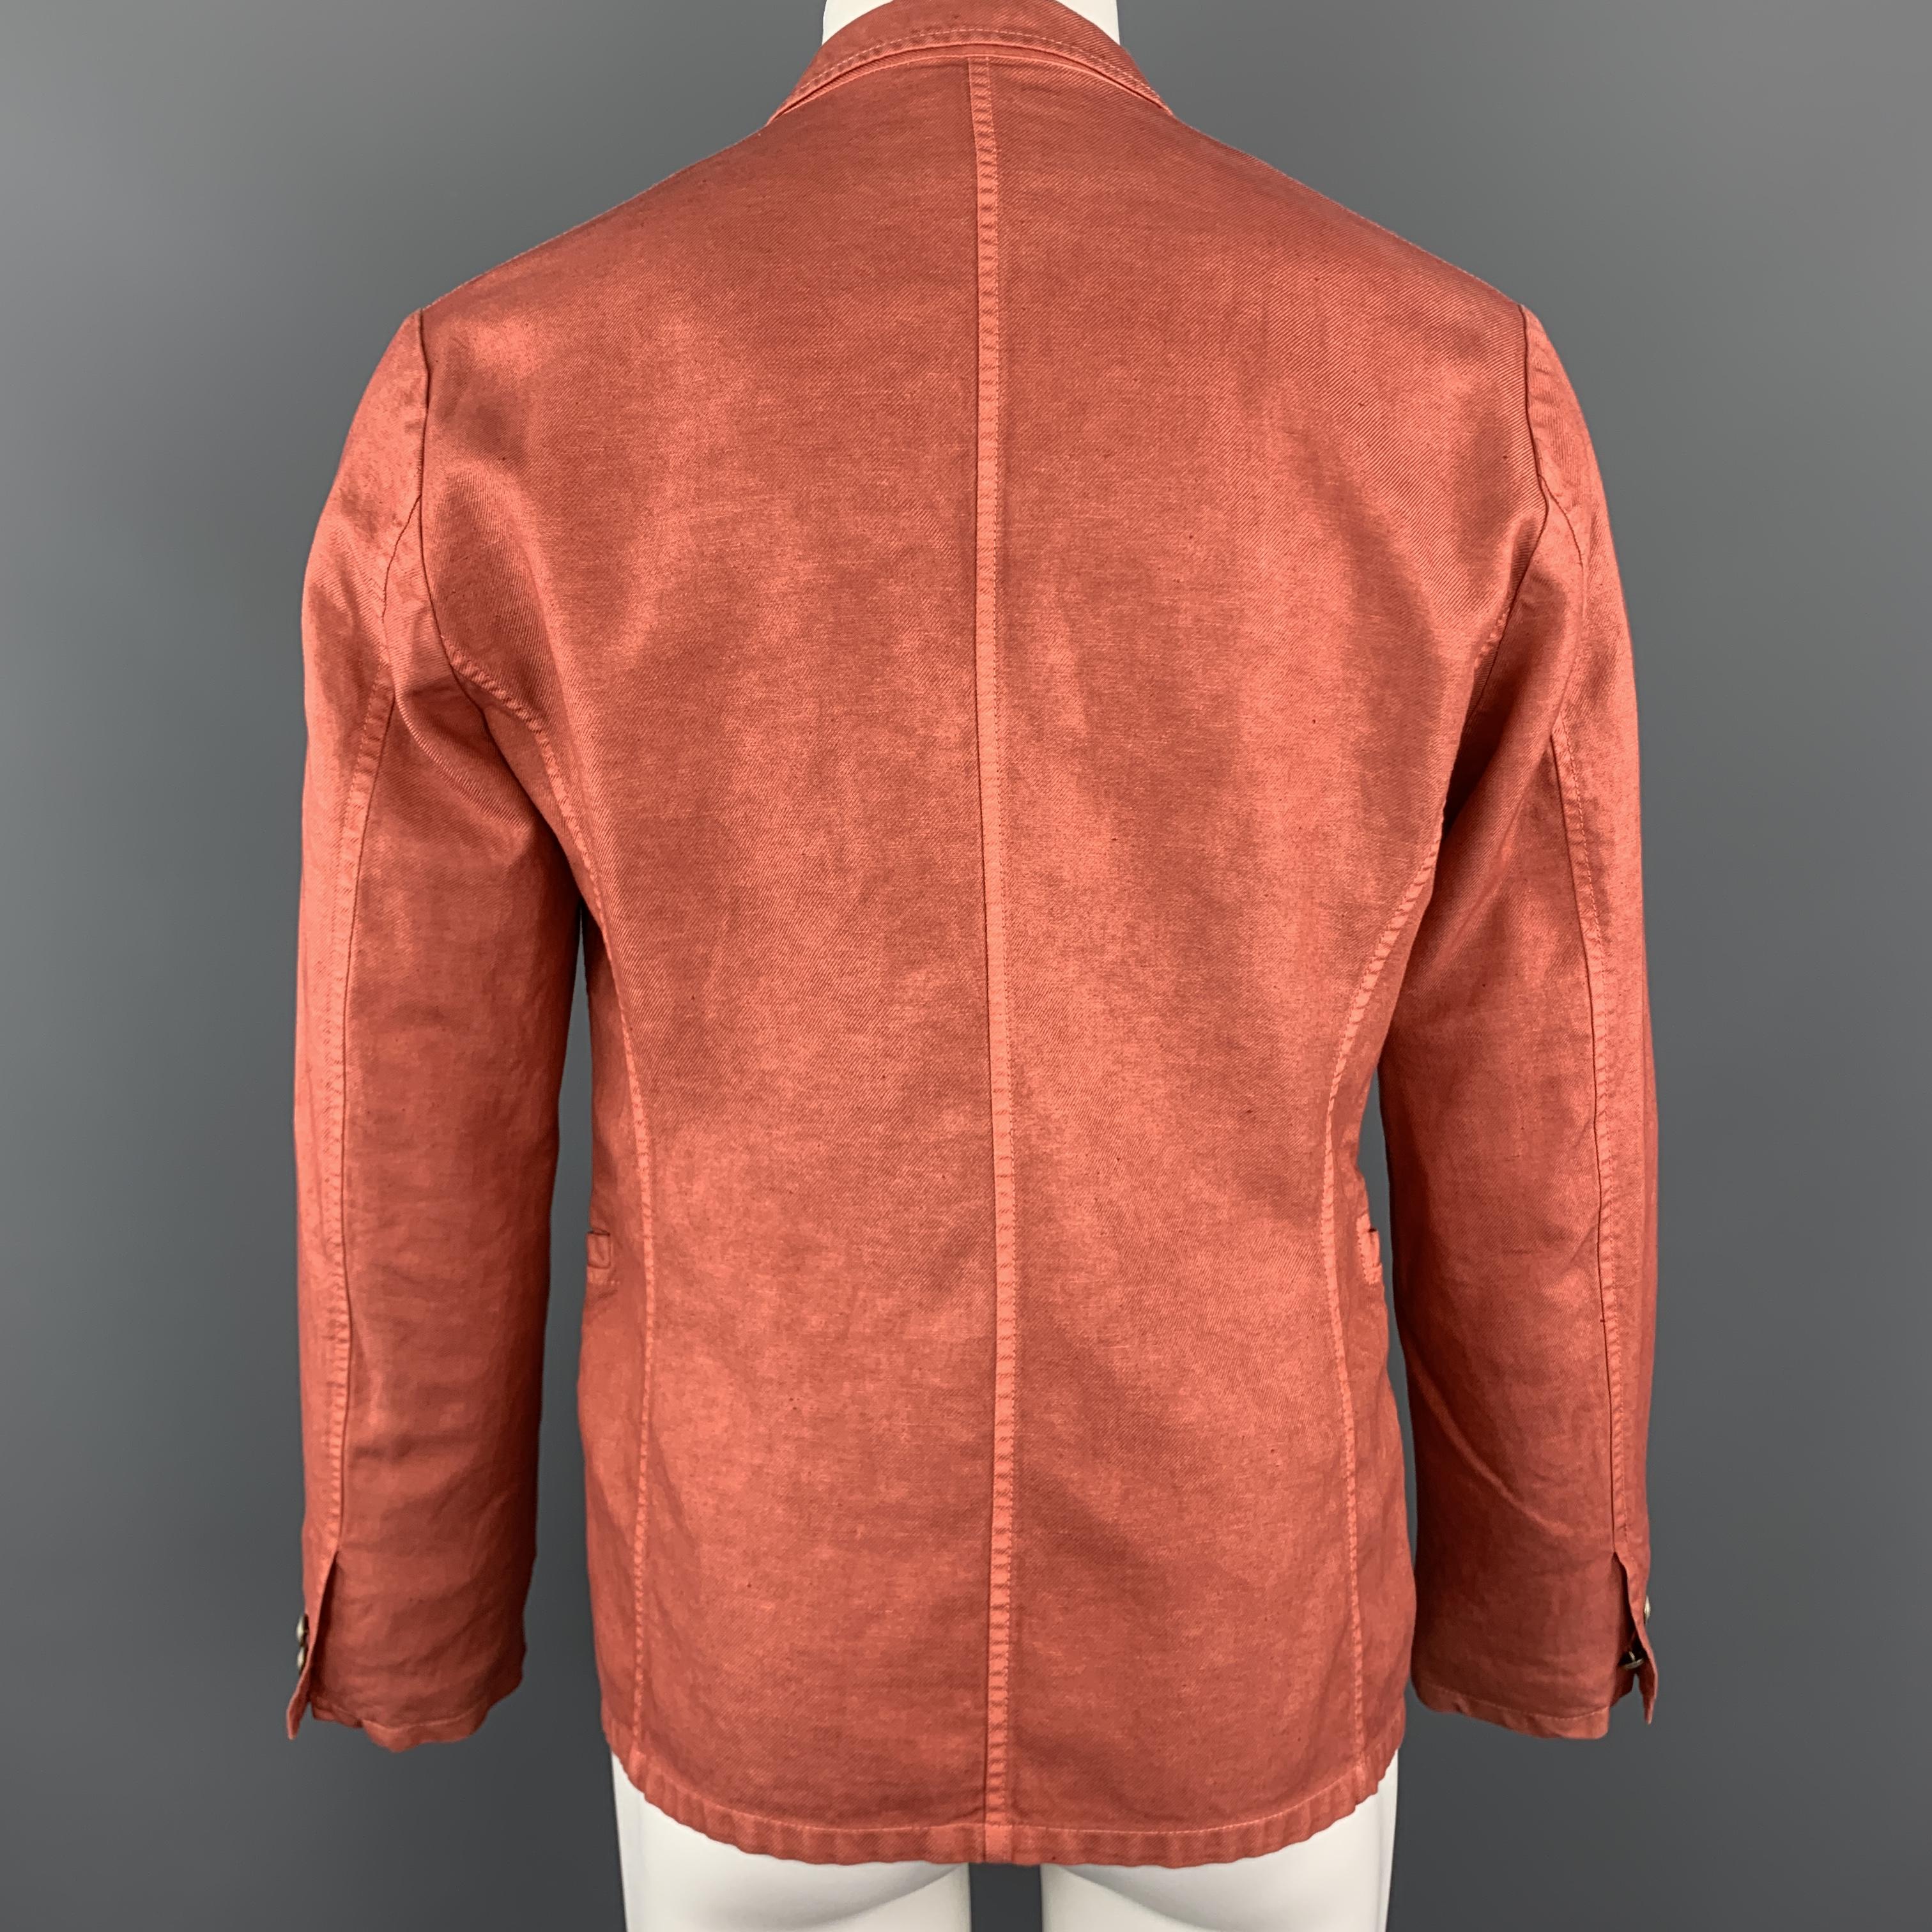 JUST CAVALLI Washed Brick Red Cotton / Linen Notch Lapel Sport Coat 3